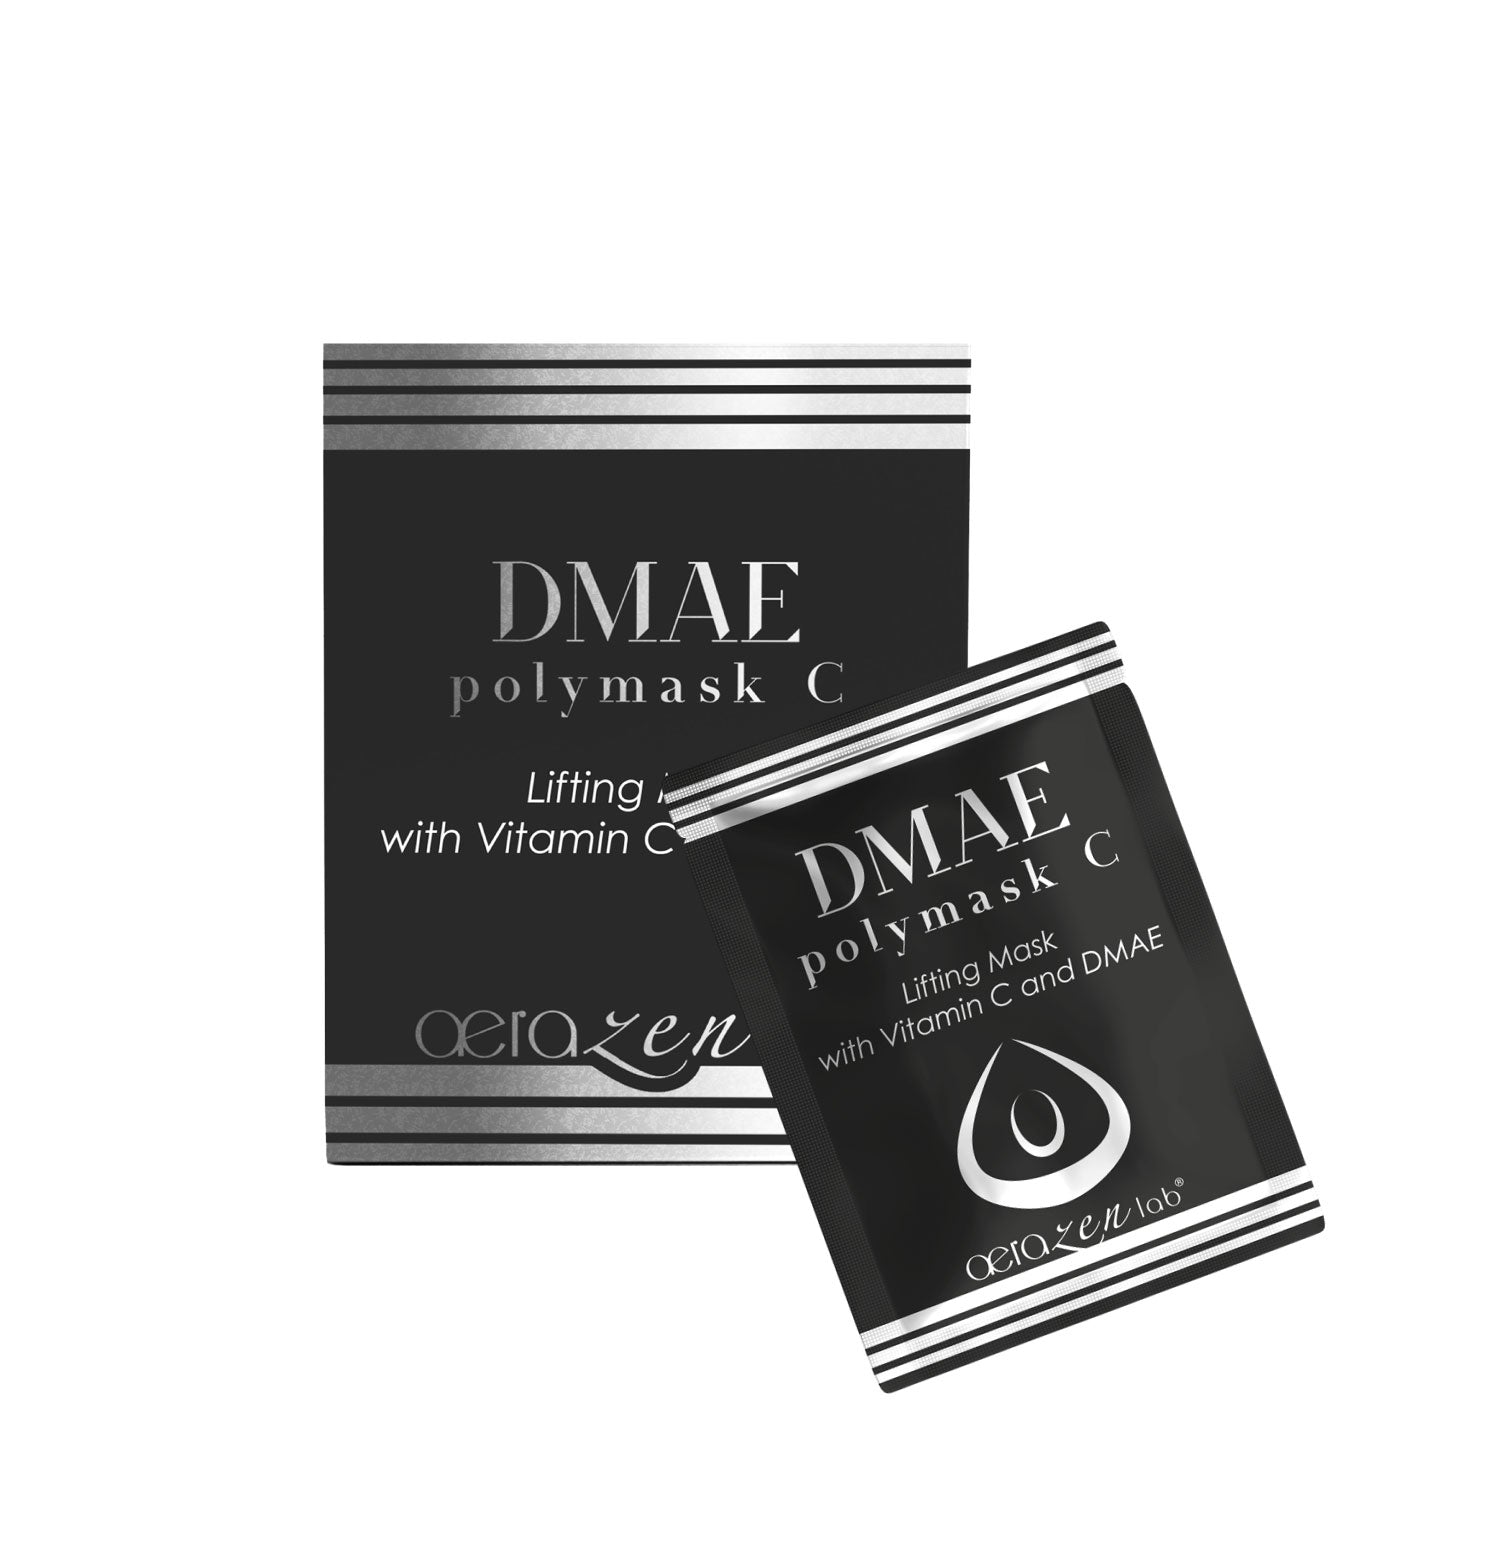 DMAE POLYMASK C - Lifting Mask with Vitamin C and DMAE 1%